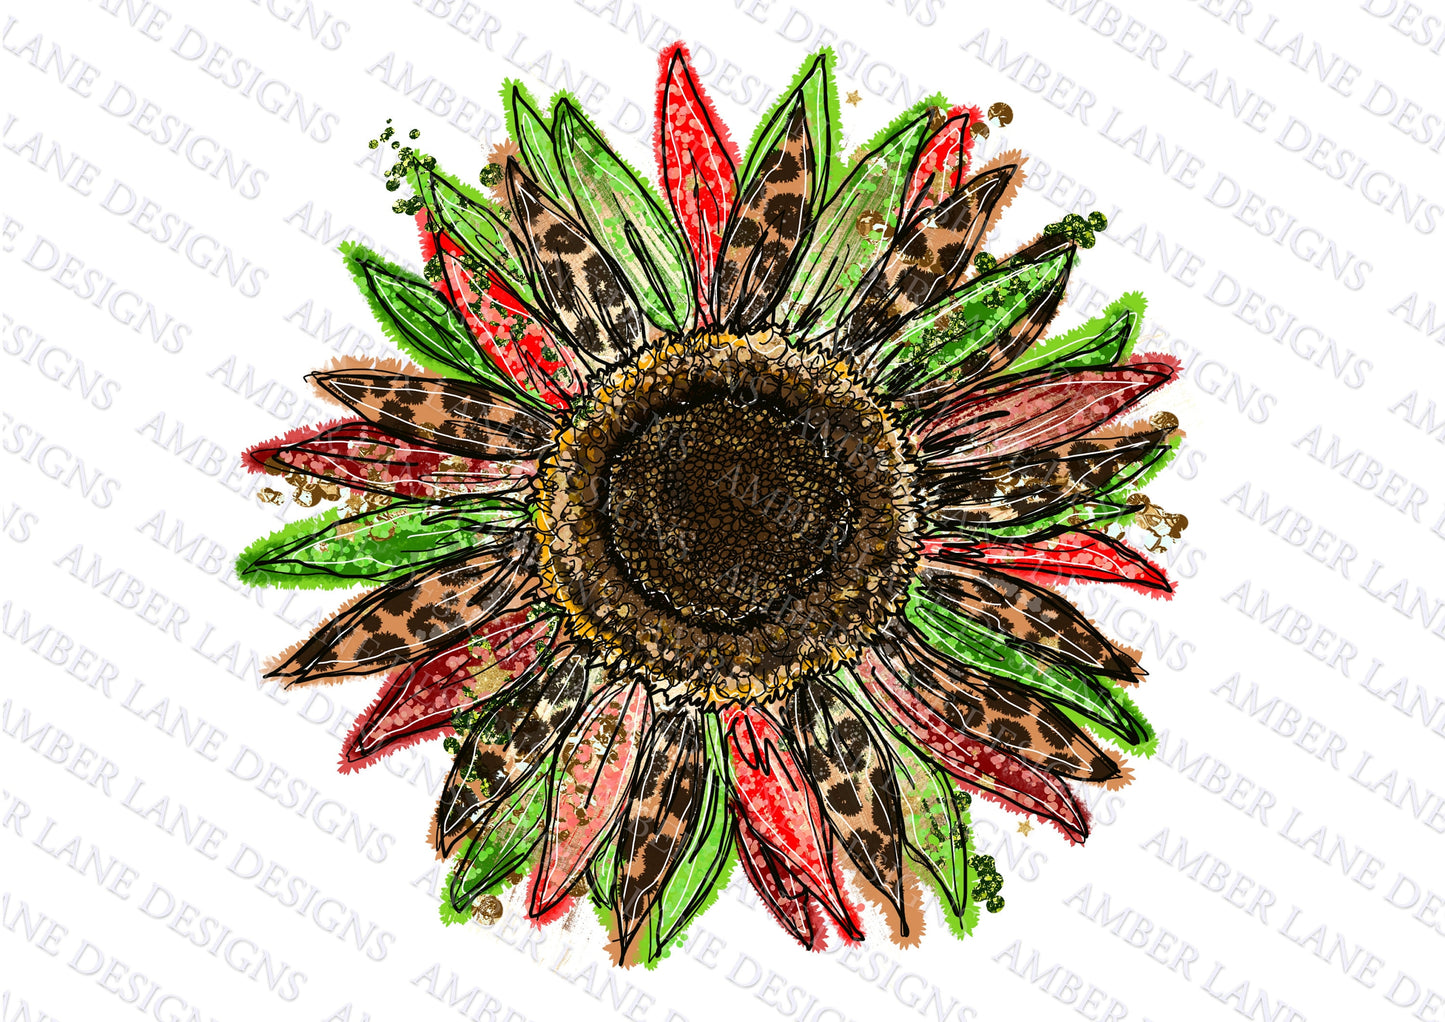 Jingle Bell Rock 'n' Roll Holiday Berry Merry Christmas Cheer Sunflower Glitter and Leopard print Mistletoe Festive Lights